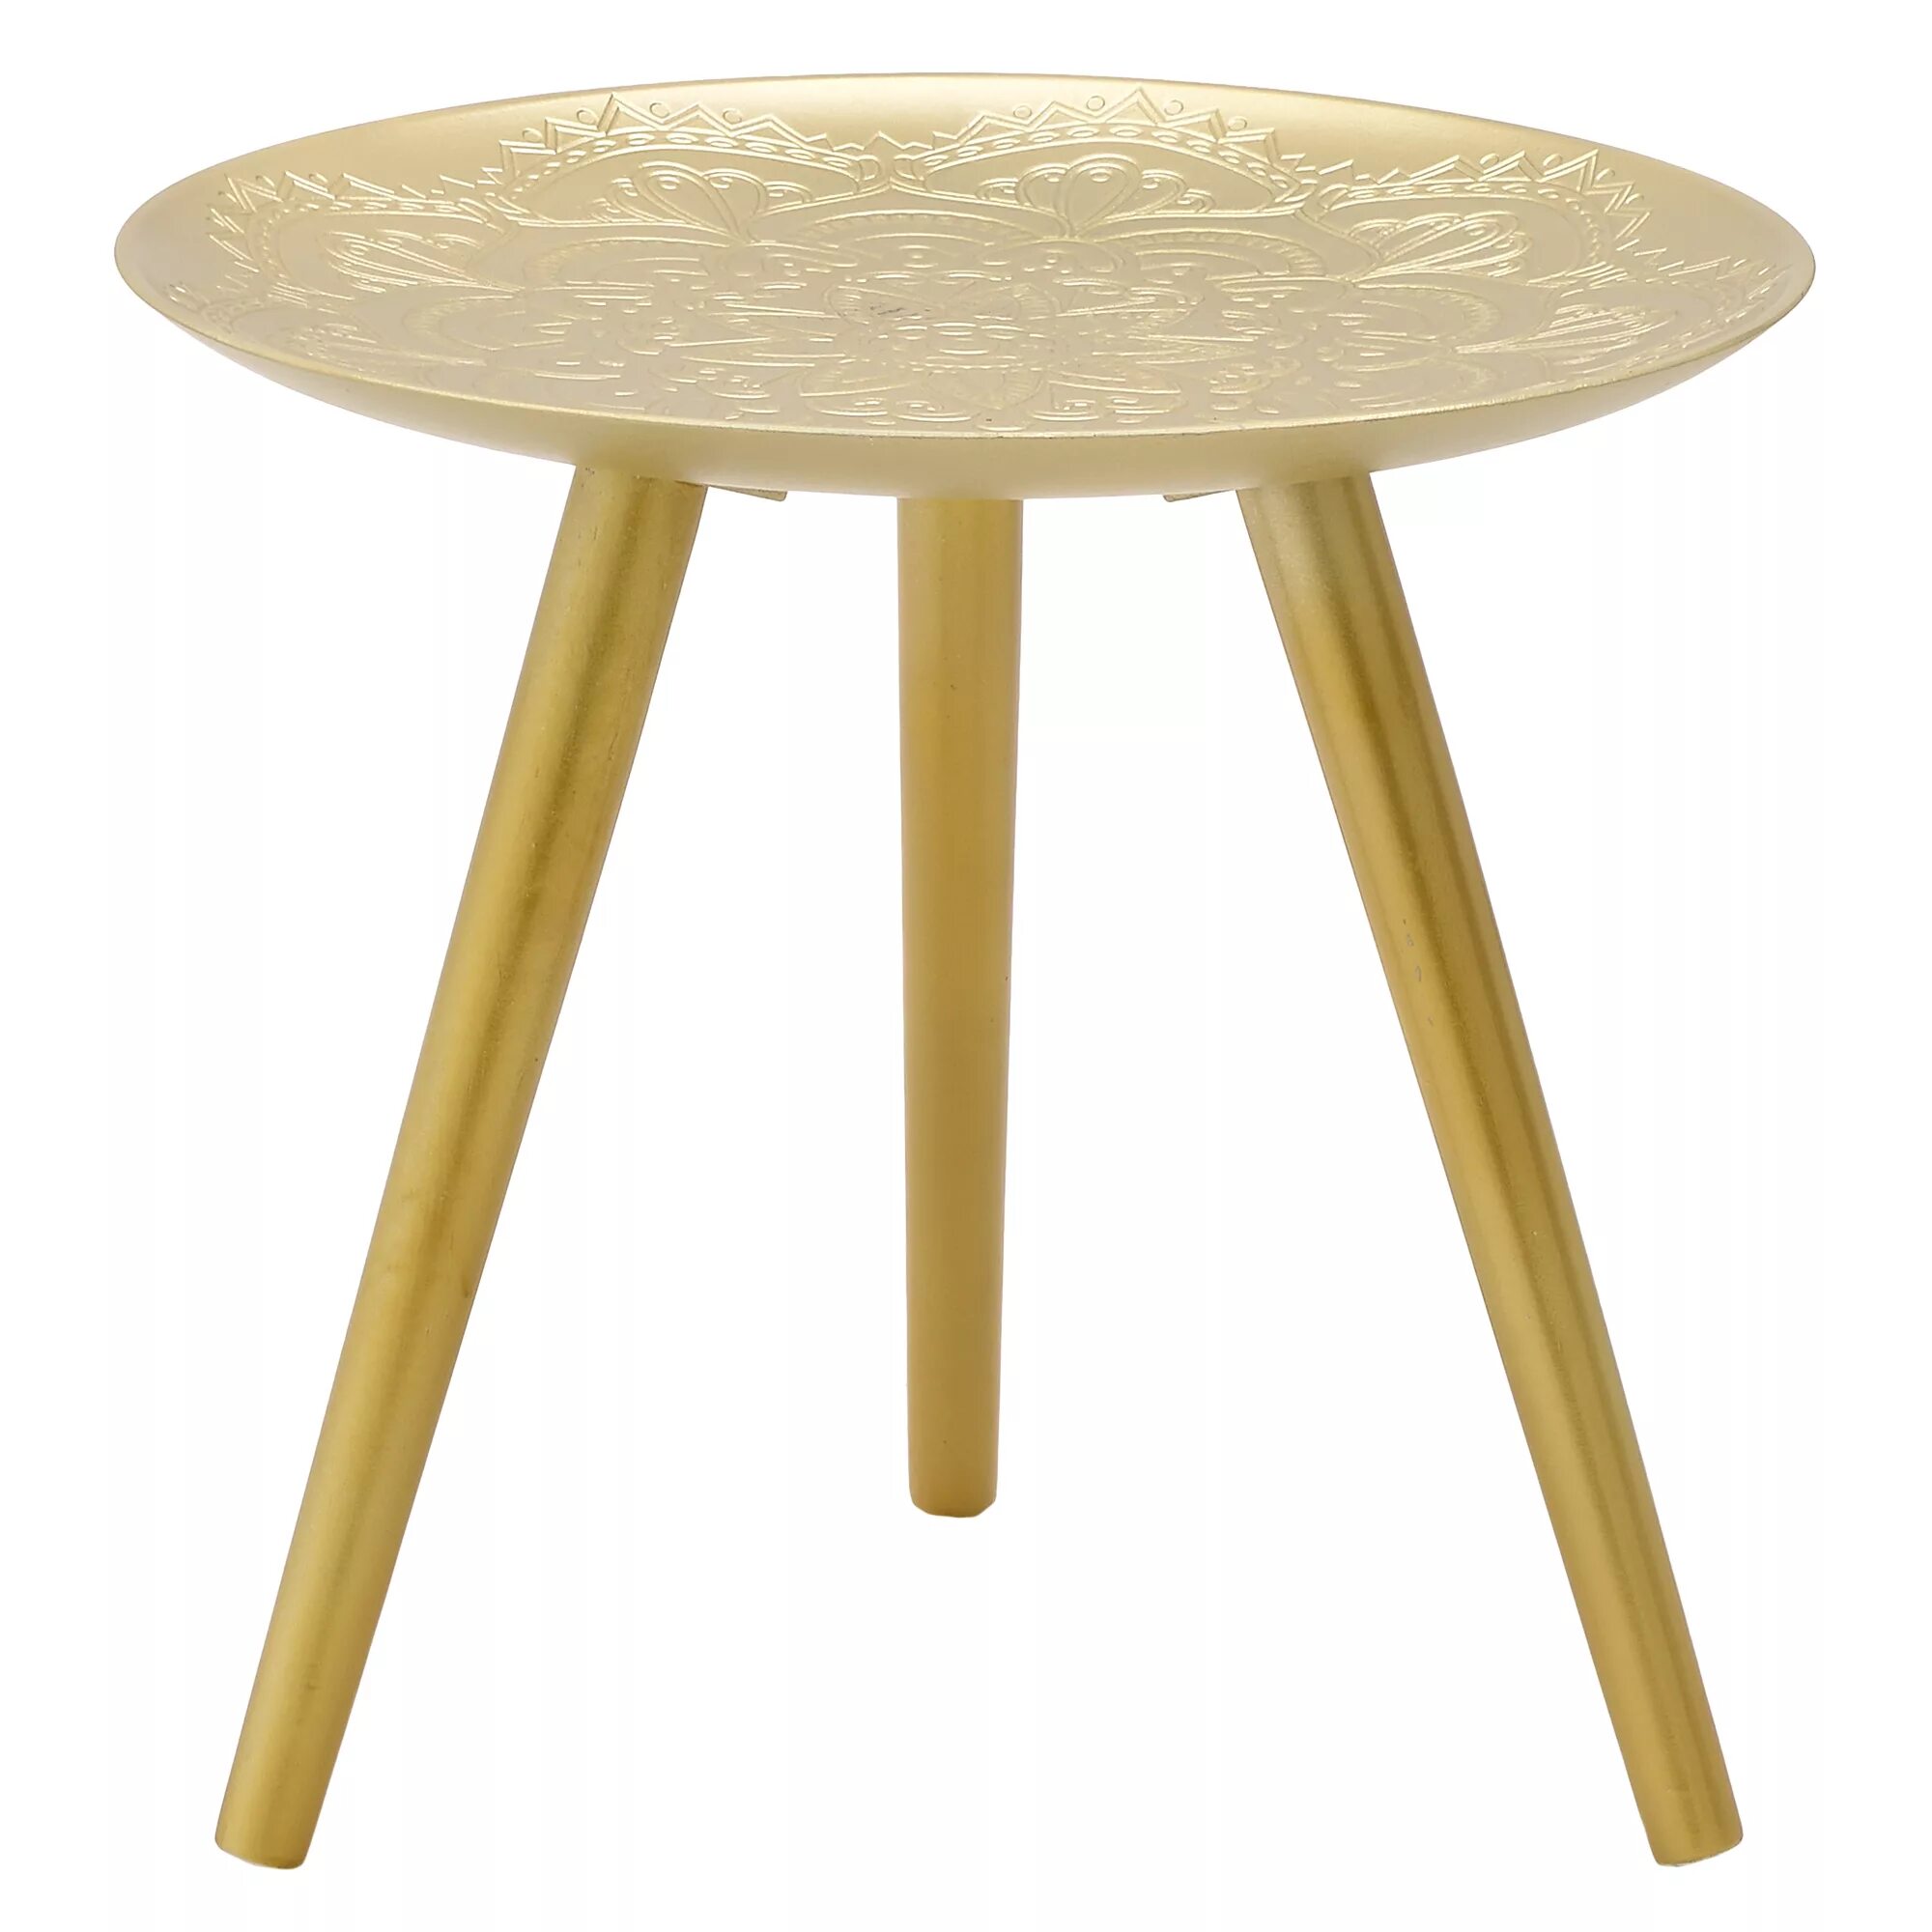 Золотой кофейный стол “Шэрон”. Кофейный столик золотого цвета артикул: IMR-1187420. Столик кофейный золотого цвета. Кофейный Стоик золотой.